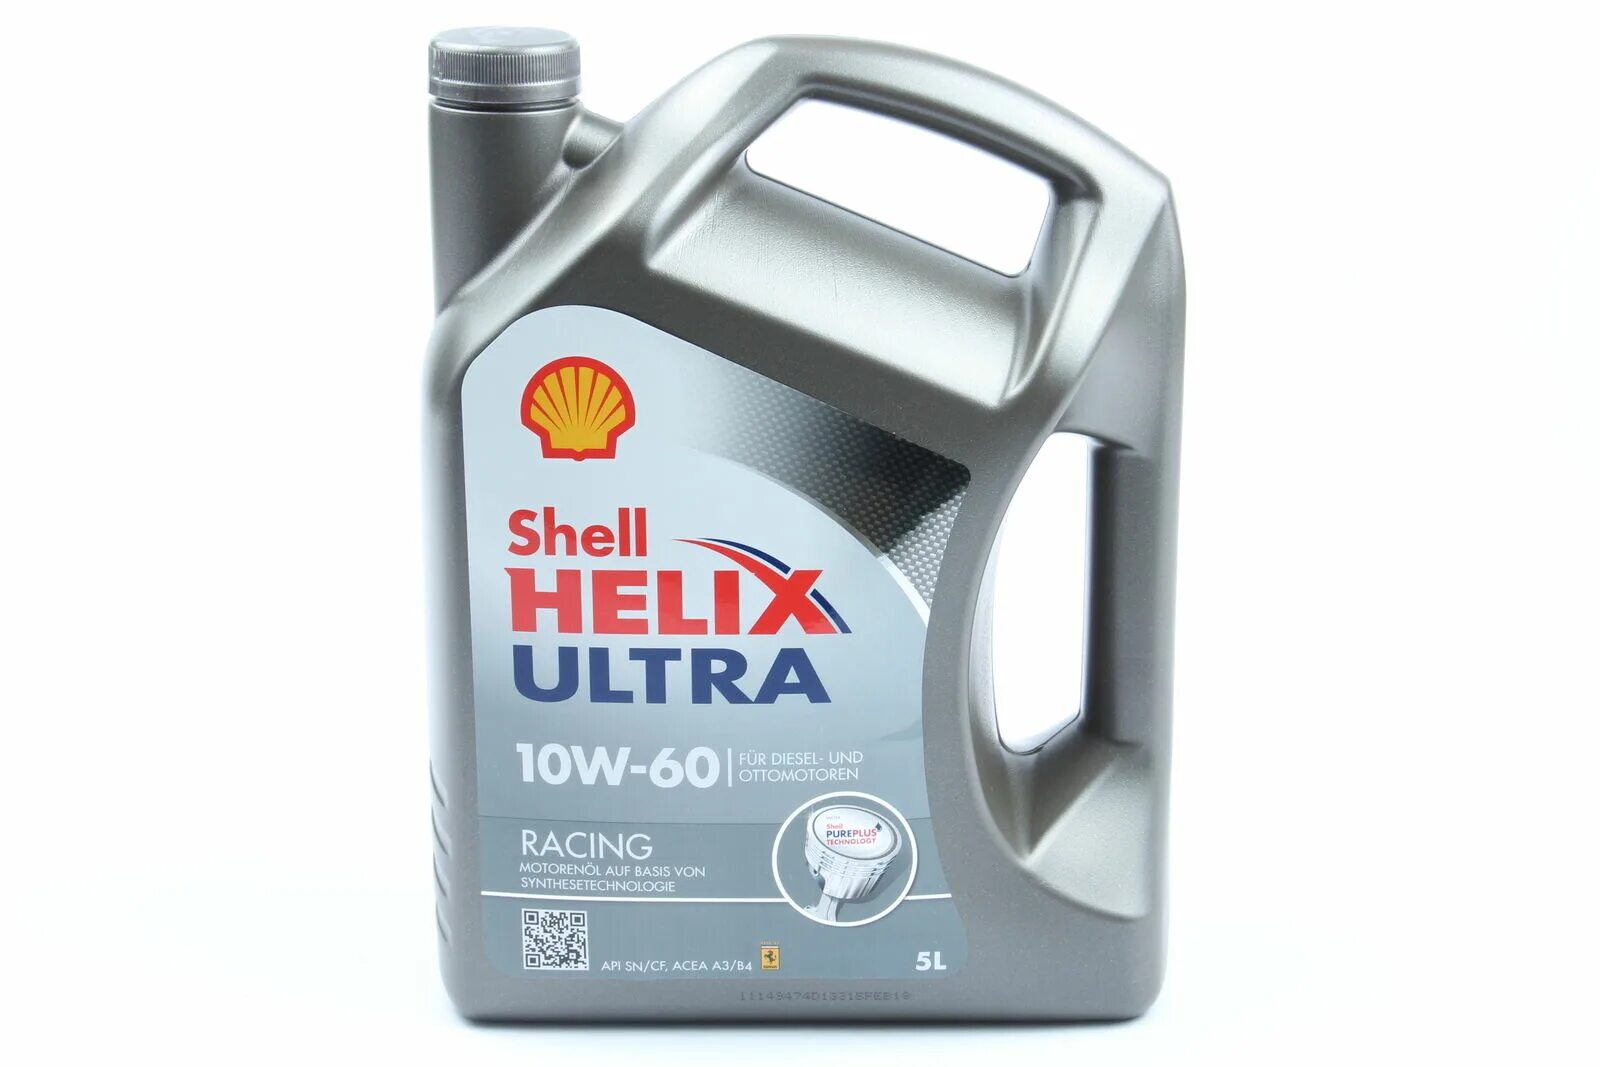 Shell helix av. Shell Helix Ultra professional af 5w-30 ACEA a5/b5. Shell Helix Ultra Pro af 5w-30 4l Helix Ultra Pro af 5w-30, 4л ACEA a5|b5. Shell Helix Ultra 5w30 a3/b4. Shell Helix Ultra af 5w30.